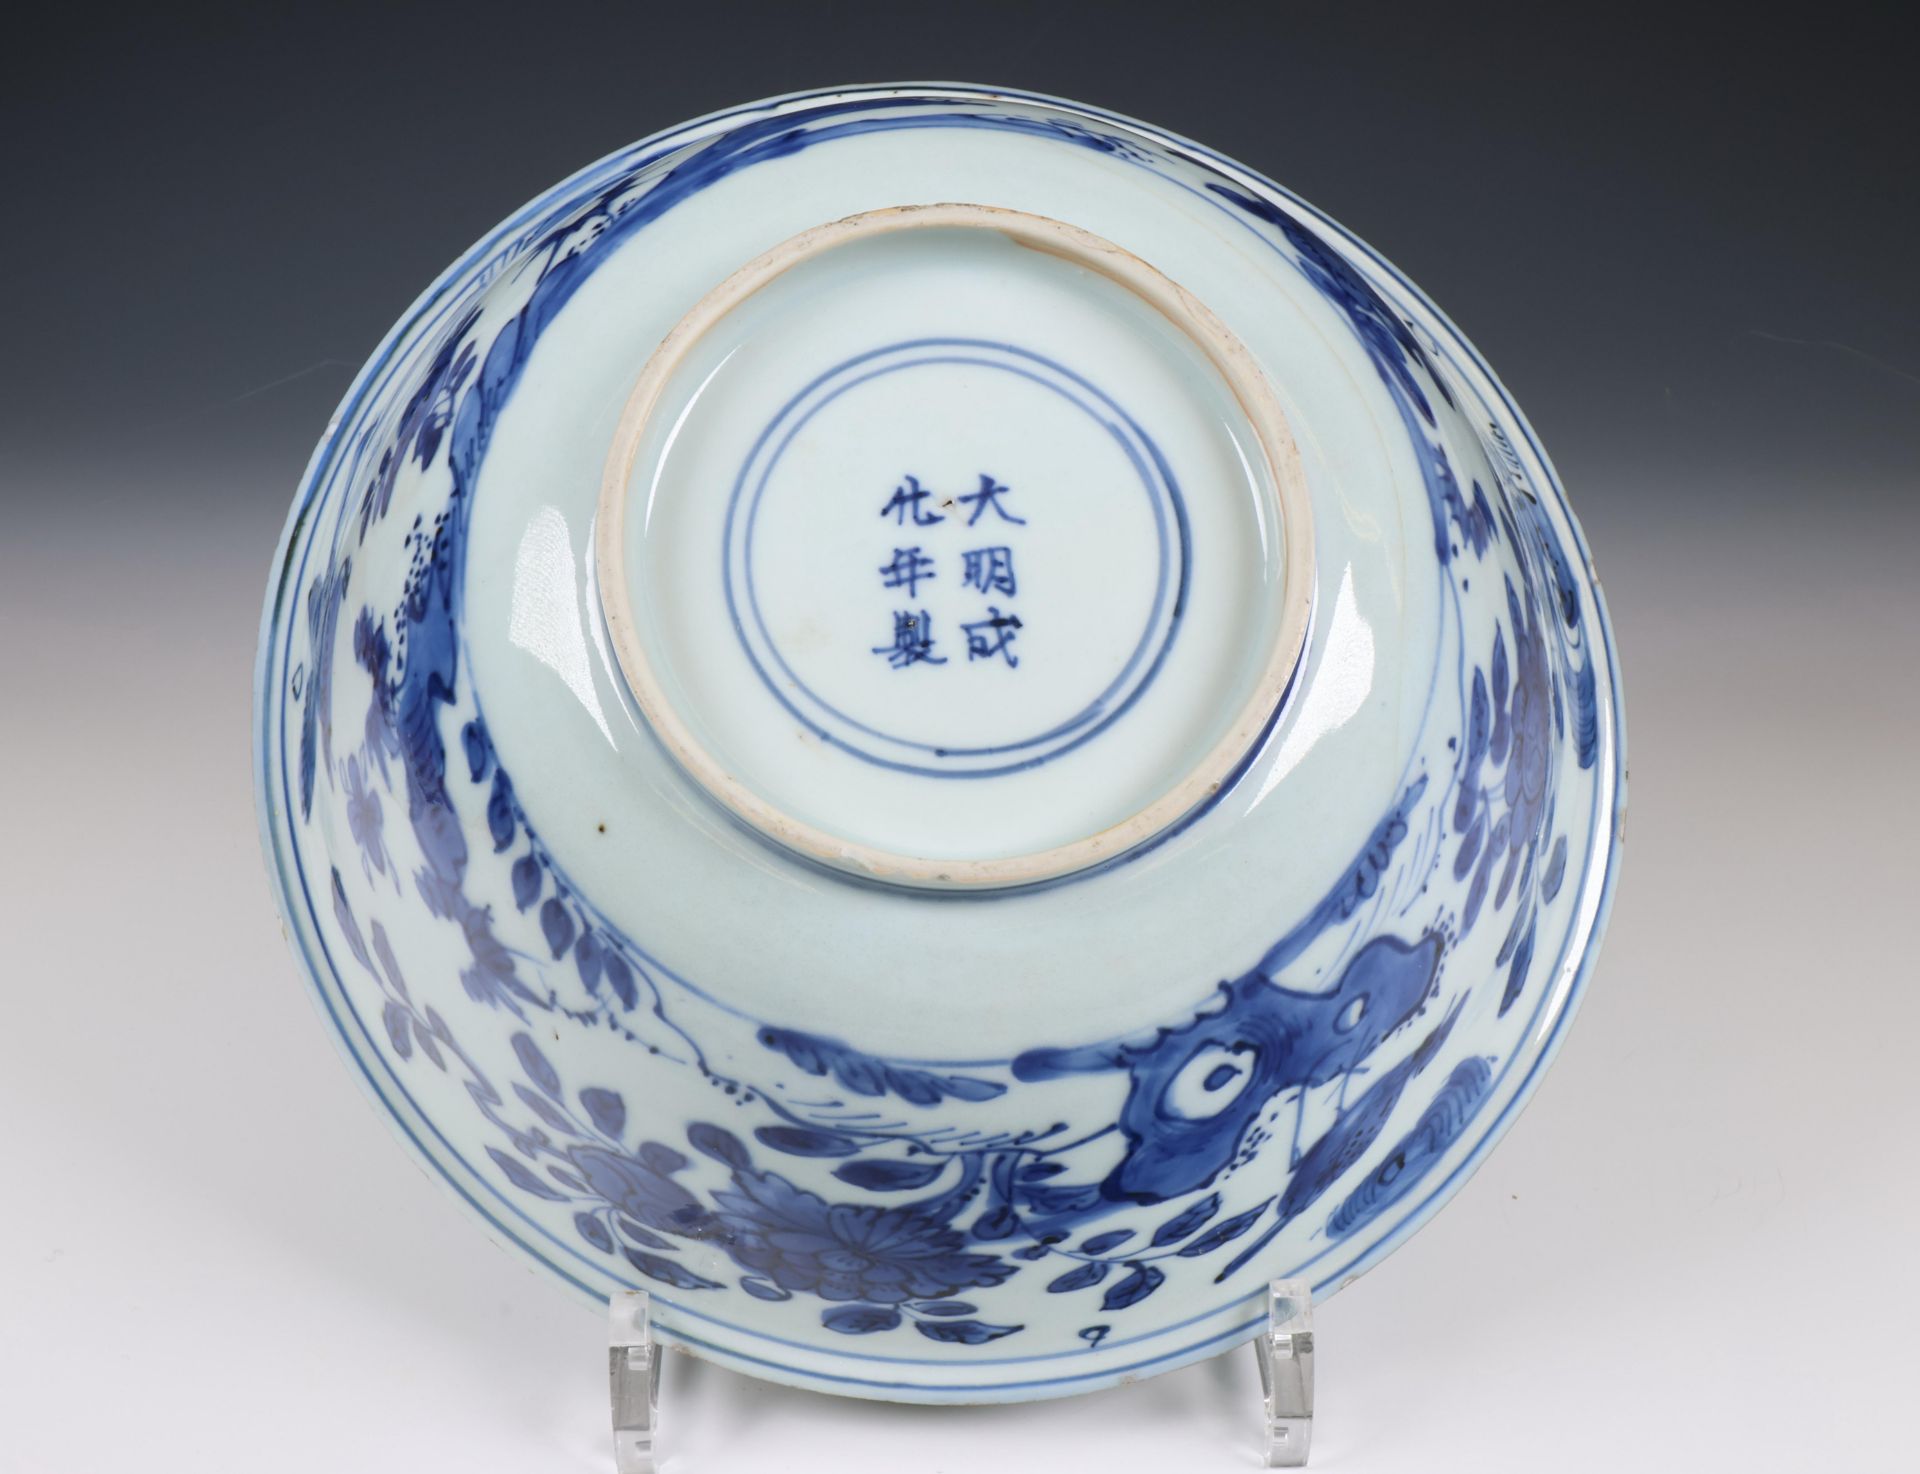 China, large blue and white porcelain bowl, 17th century, - Image 7 of 7